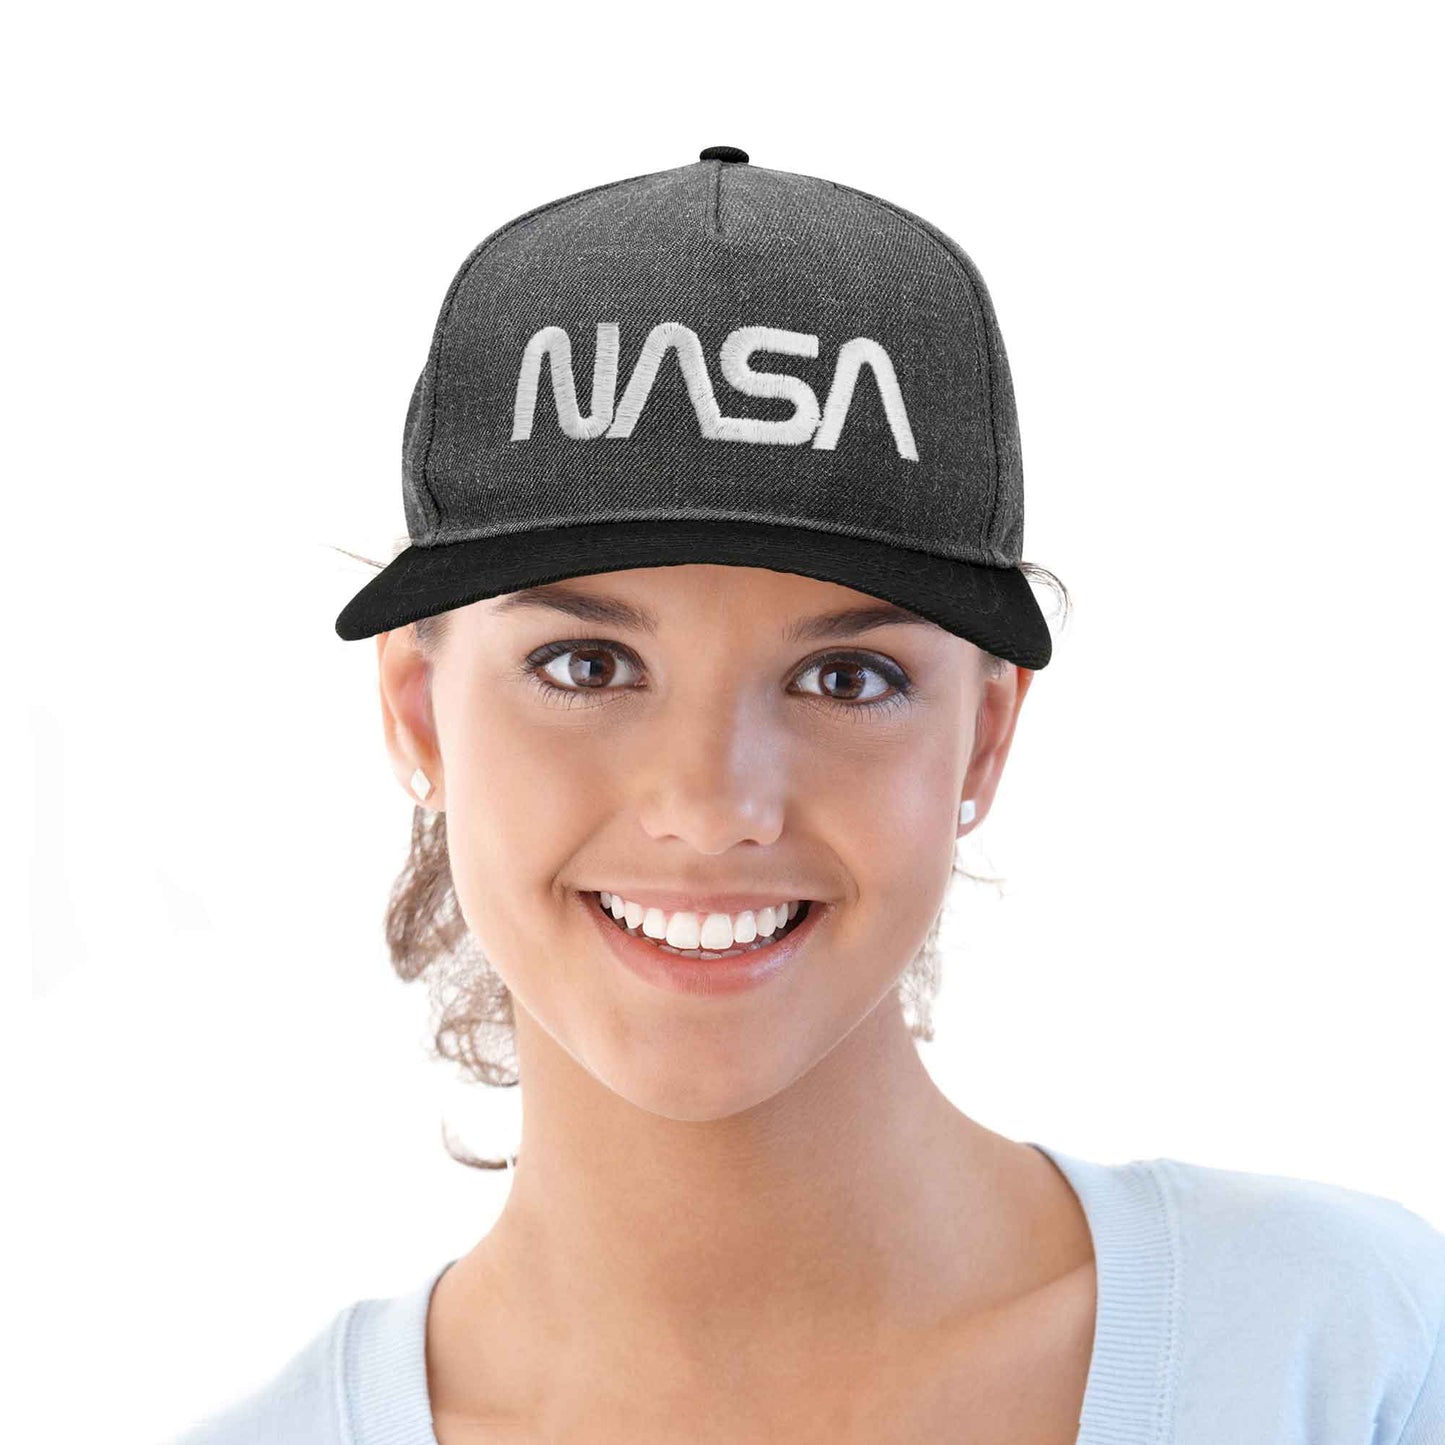 Dalix NASA Worm Snapback Hat